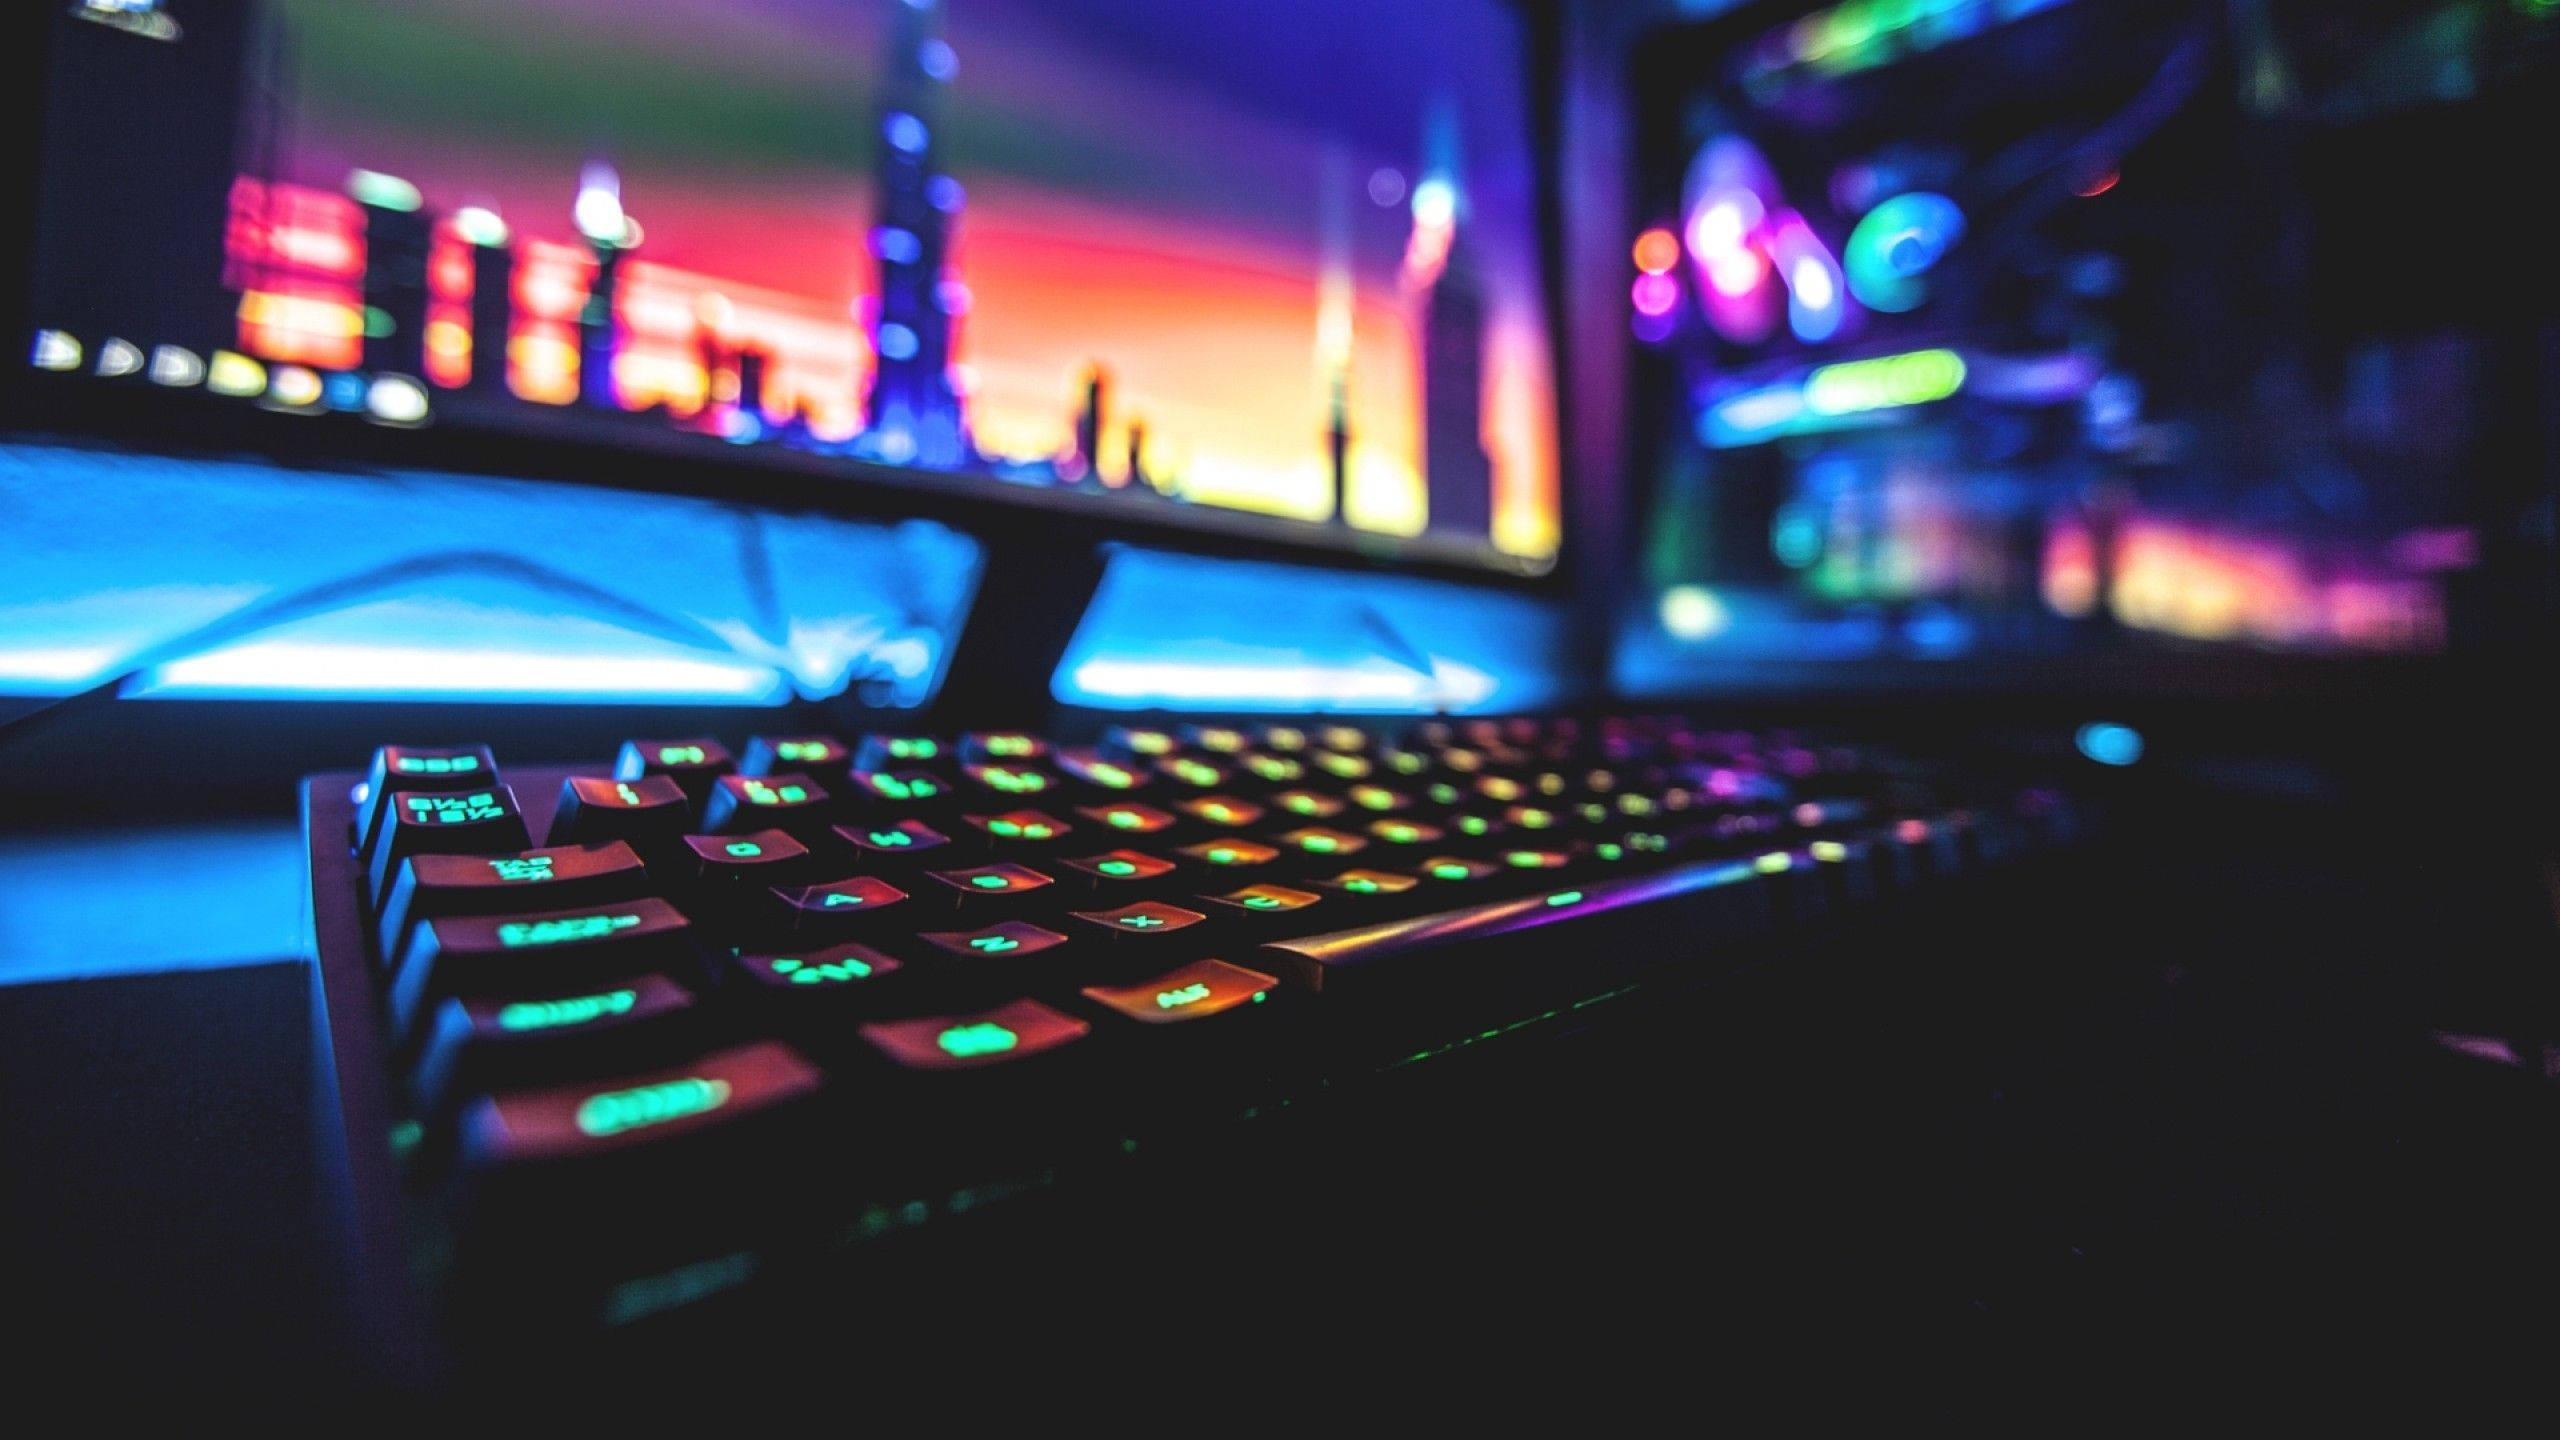 2560x1440 Gaming Rgb Keyboard Background